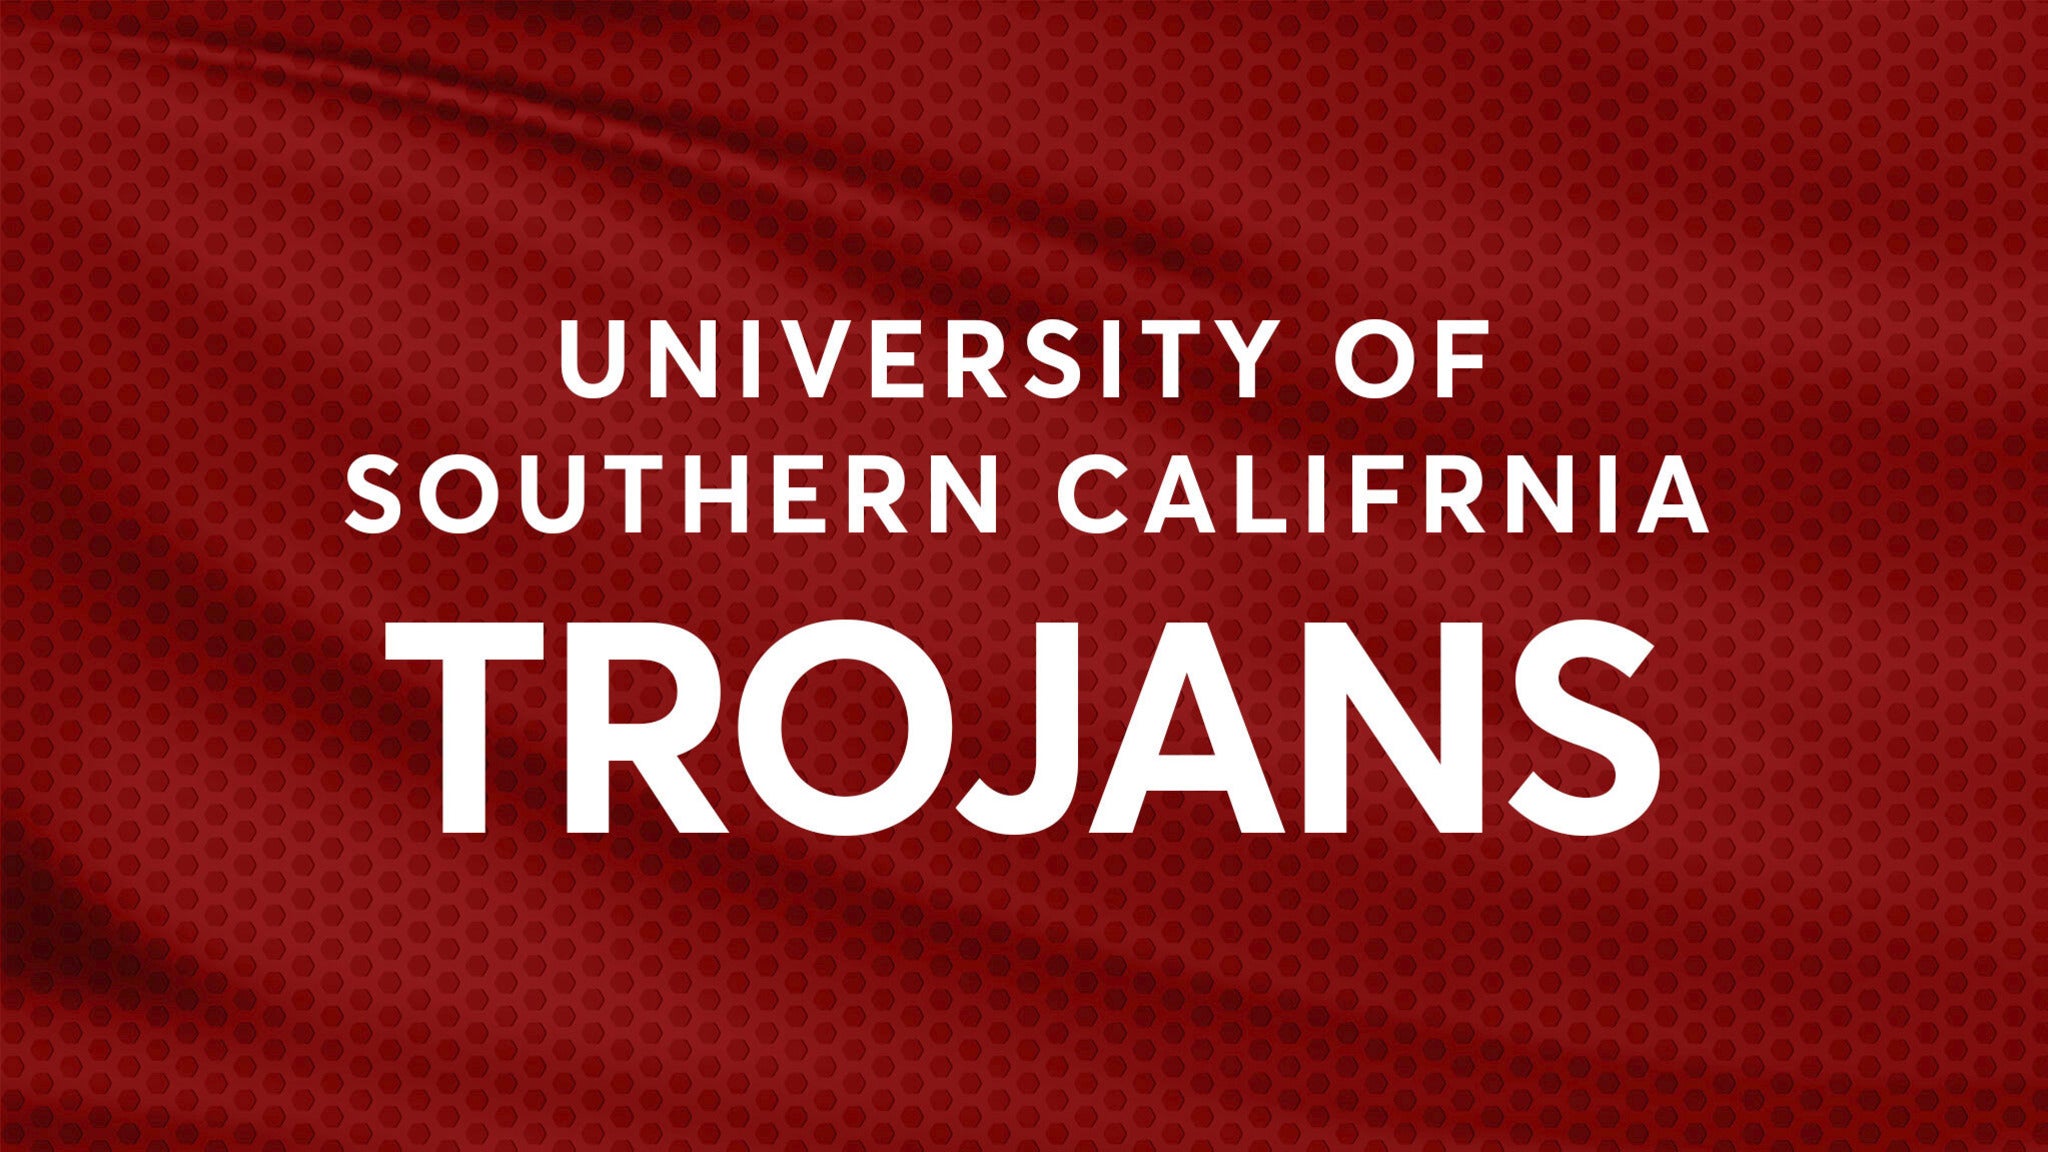 USC Trojans Football vs. Washington Huskies Football - Los Angeles, CA 90037